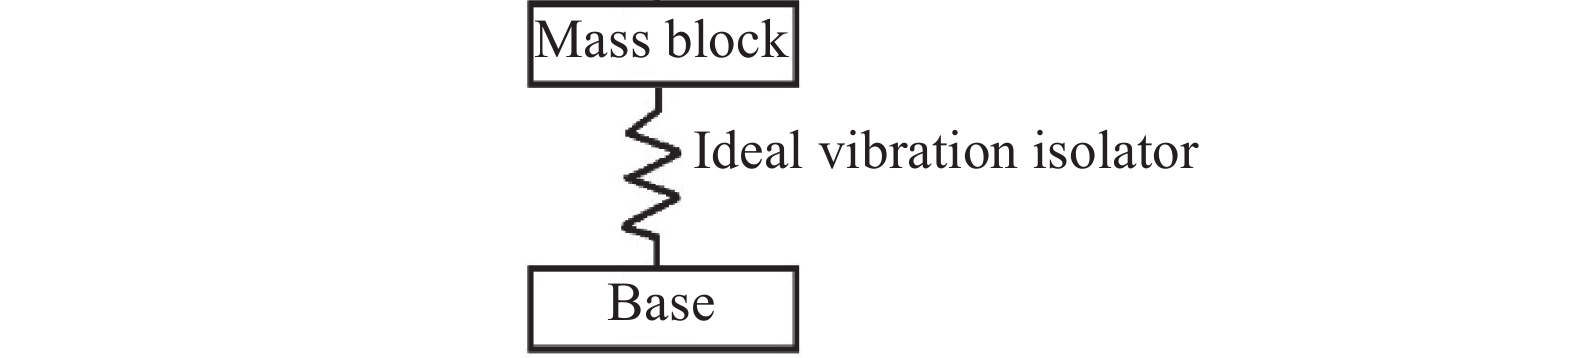 Ideal vibration isolator model